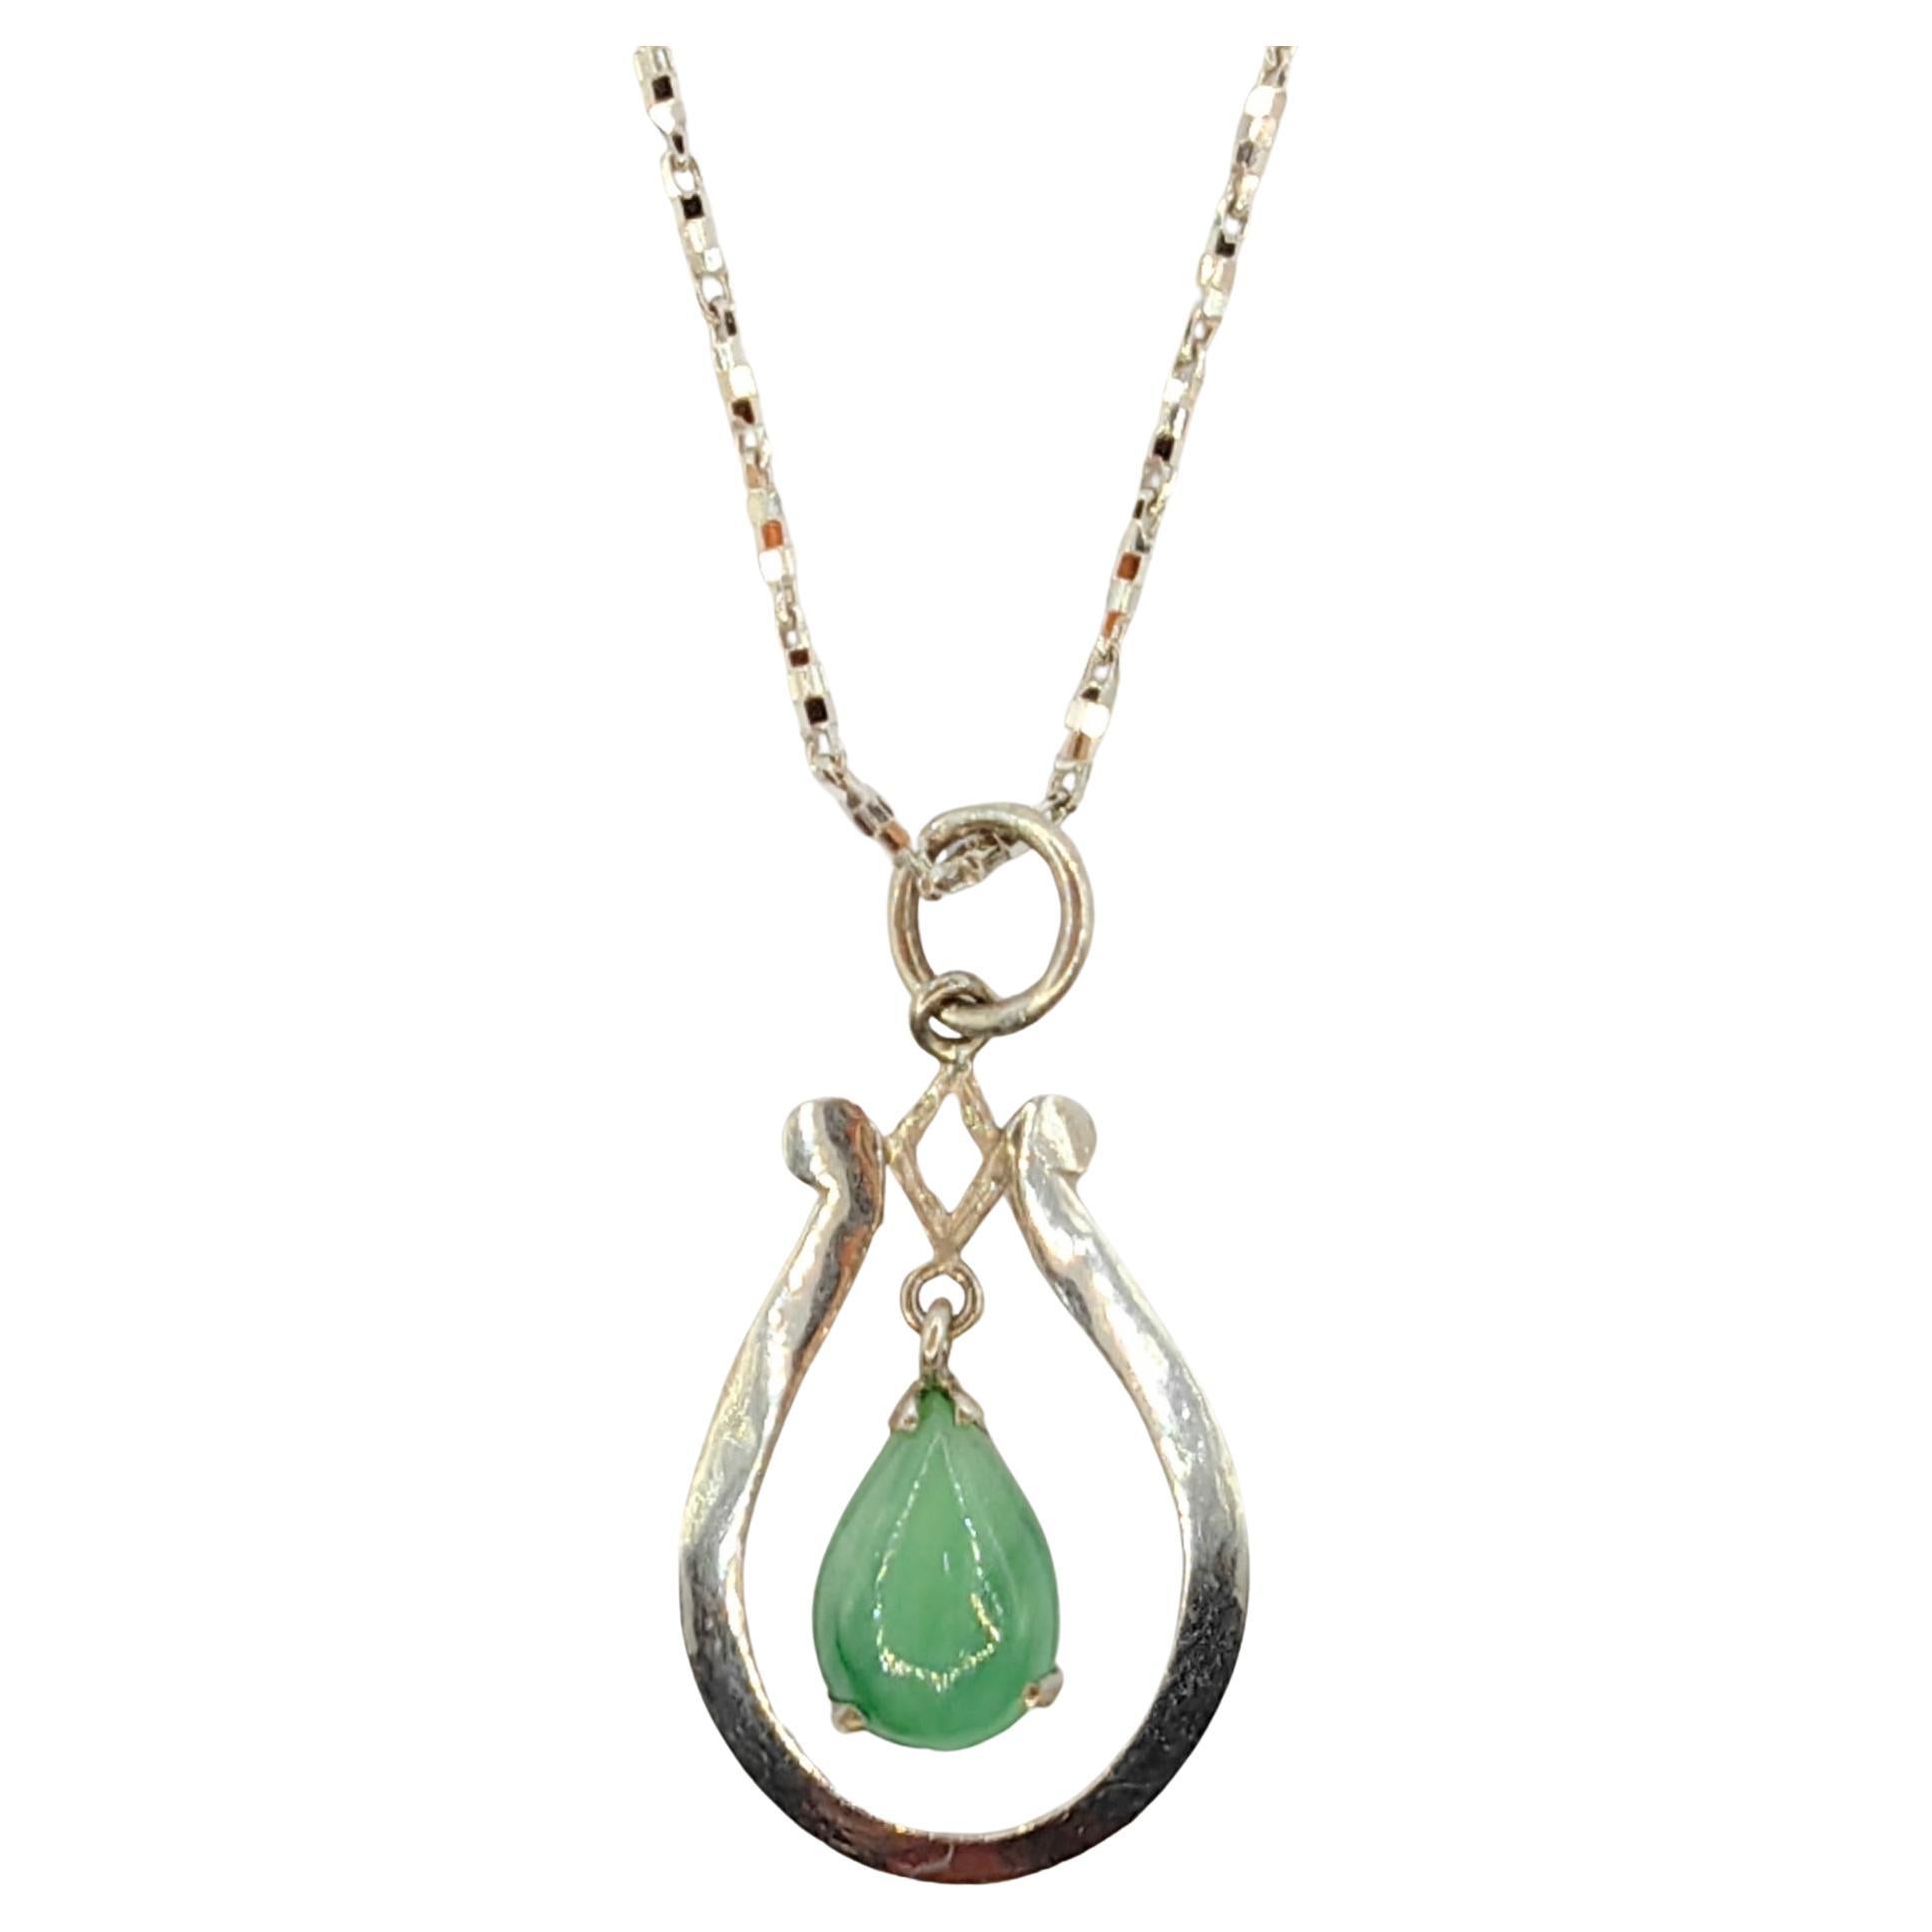 Vintage Pear Shaped Teardrop Jade Pendant in Sterling Silver For Sale